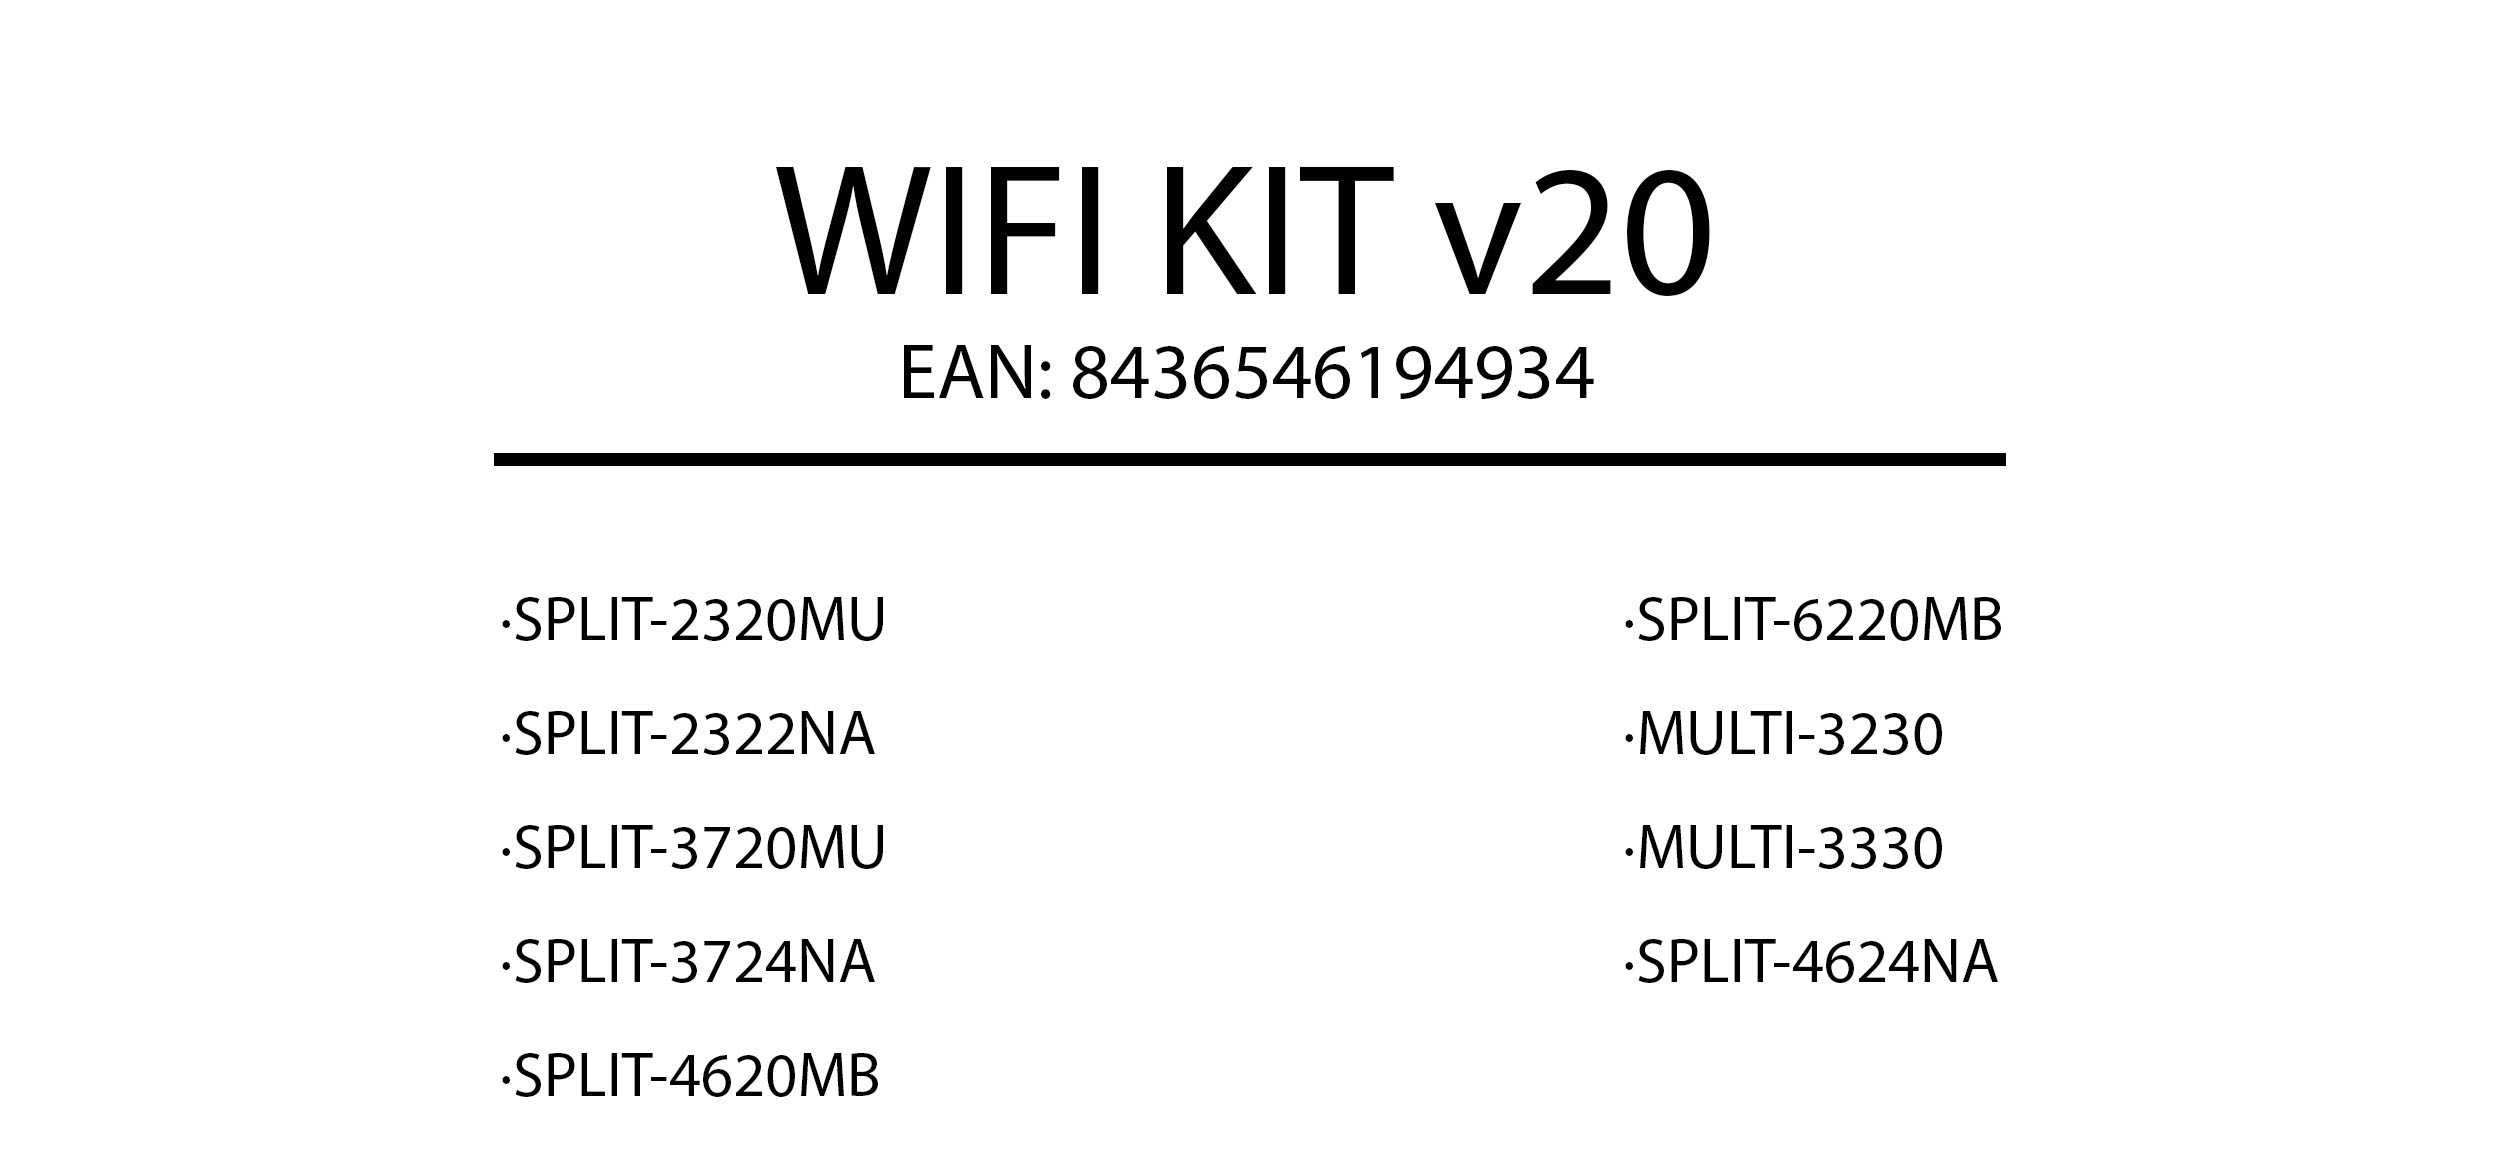 postventa aires lista-Wifi-kit-v20.jpg